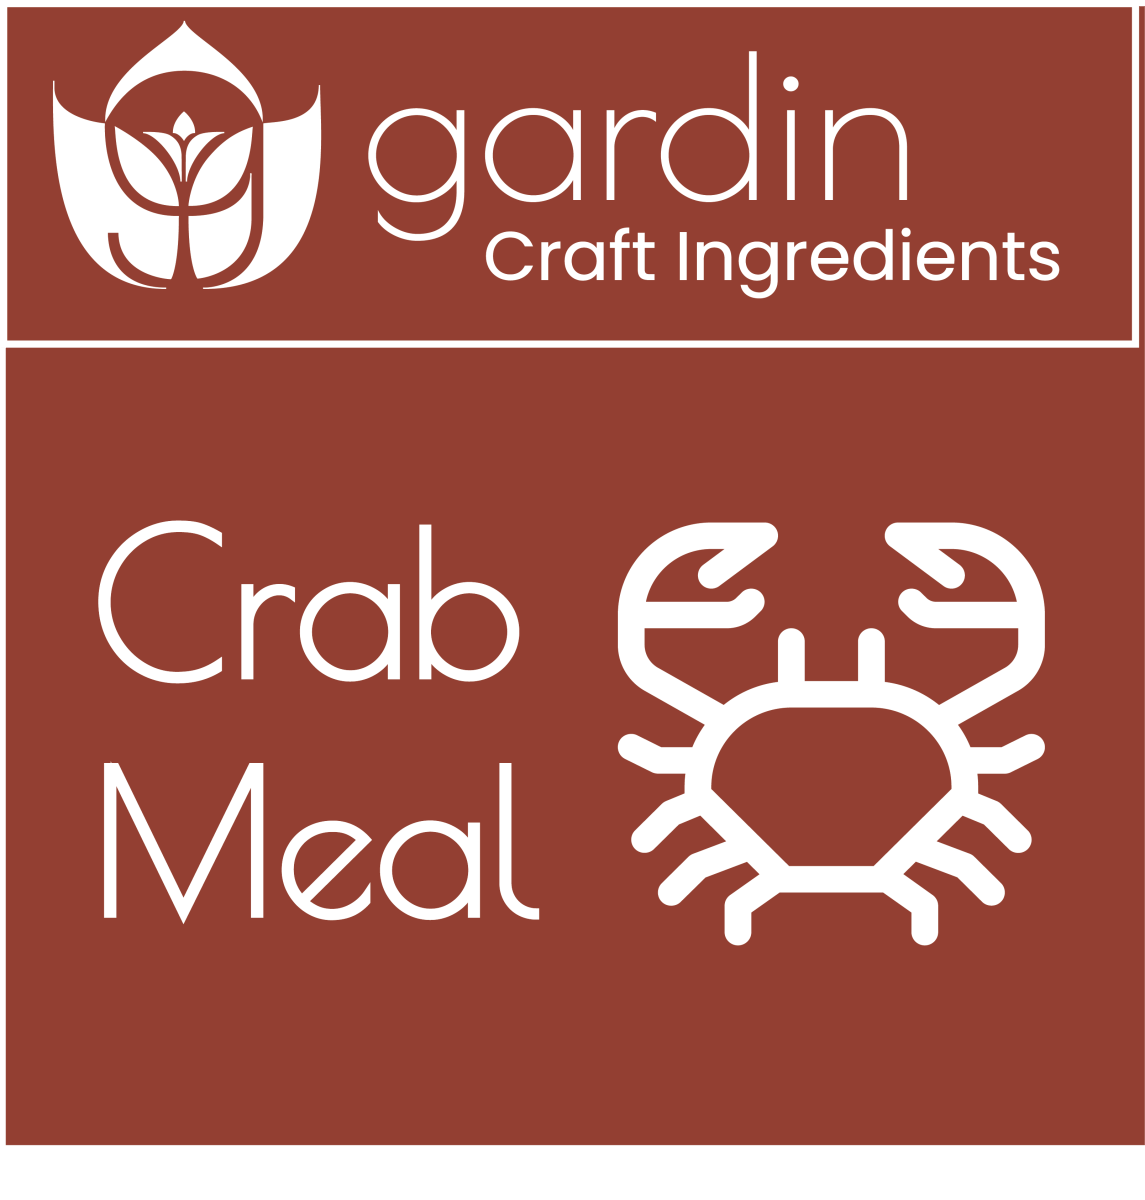 - Crab Meal - Gardin Warehouse